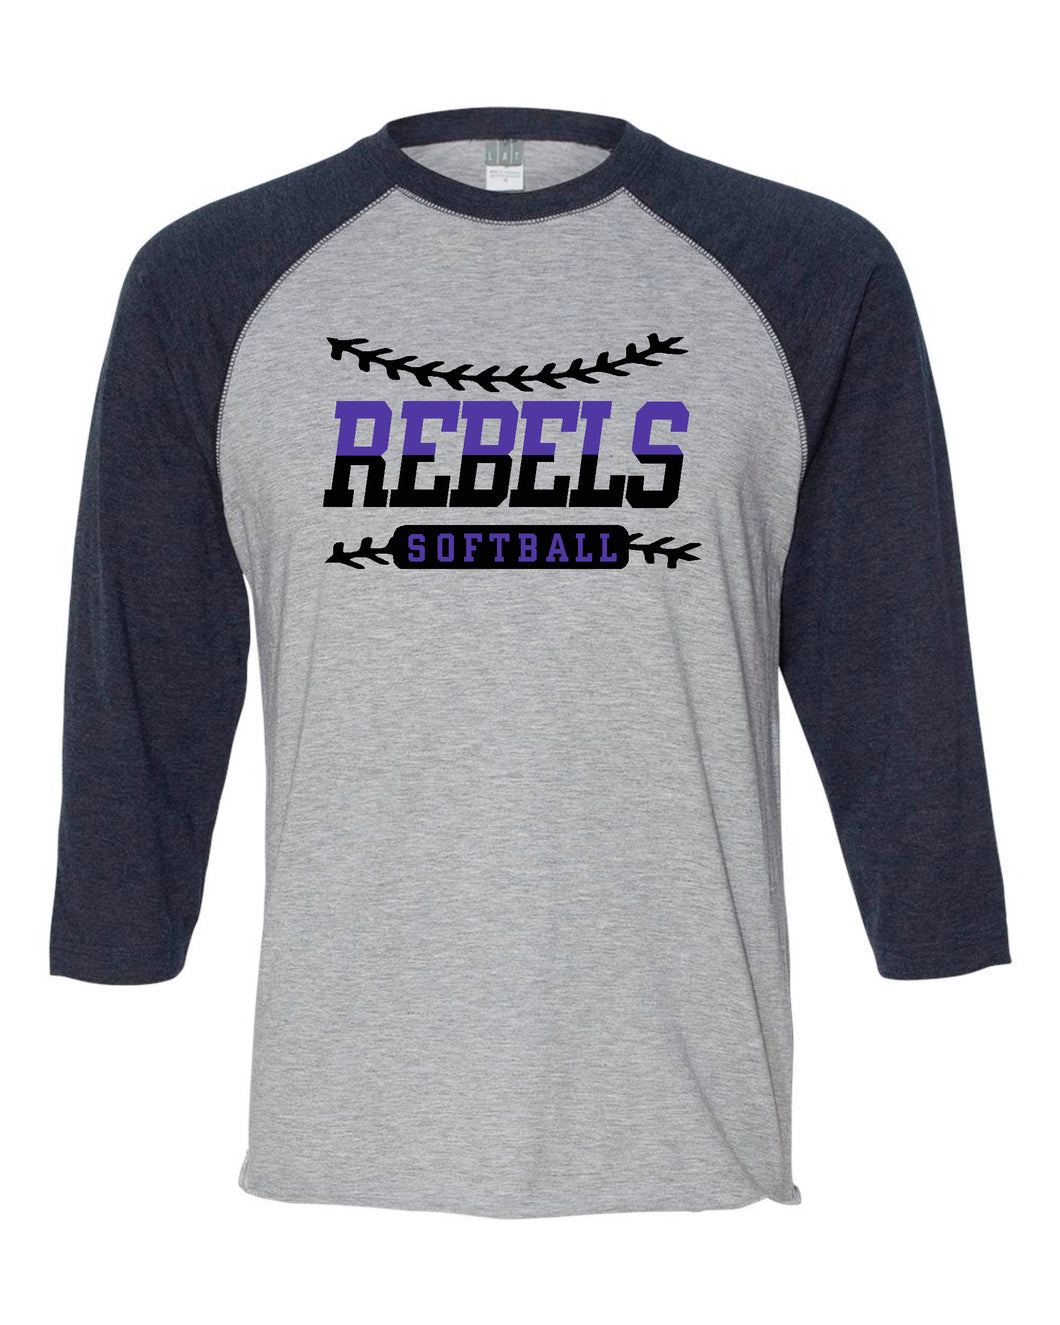 MCC Rebels Softball BELLA + CANVAS - Unisex Three-Quarter Sleeve Baseball Tee Design 2